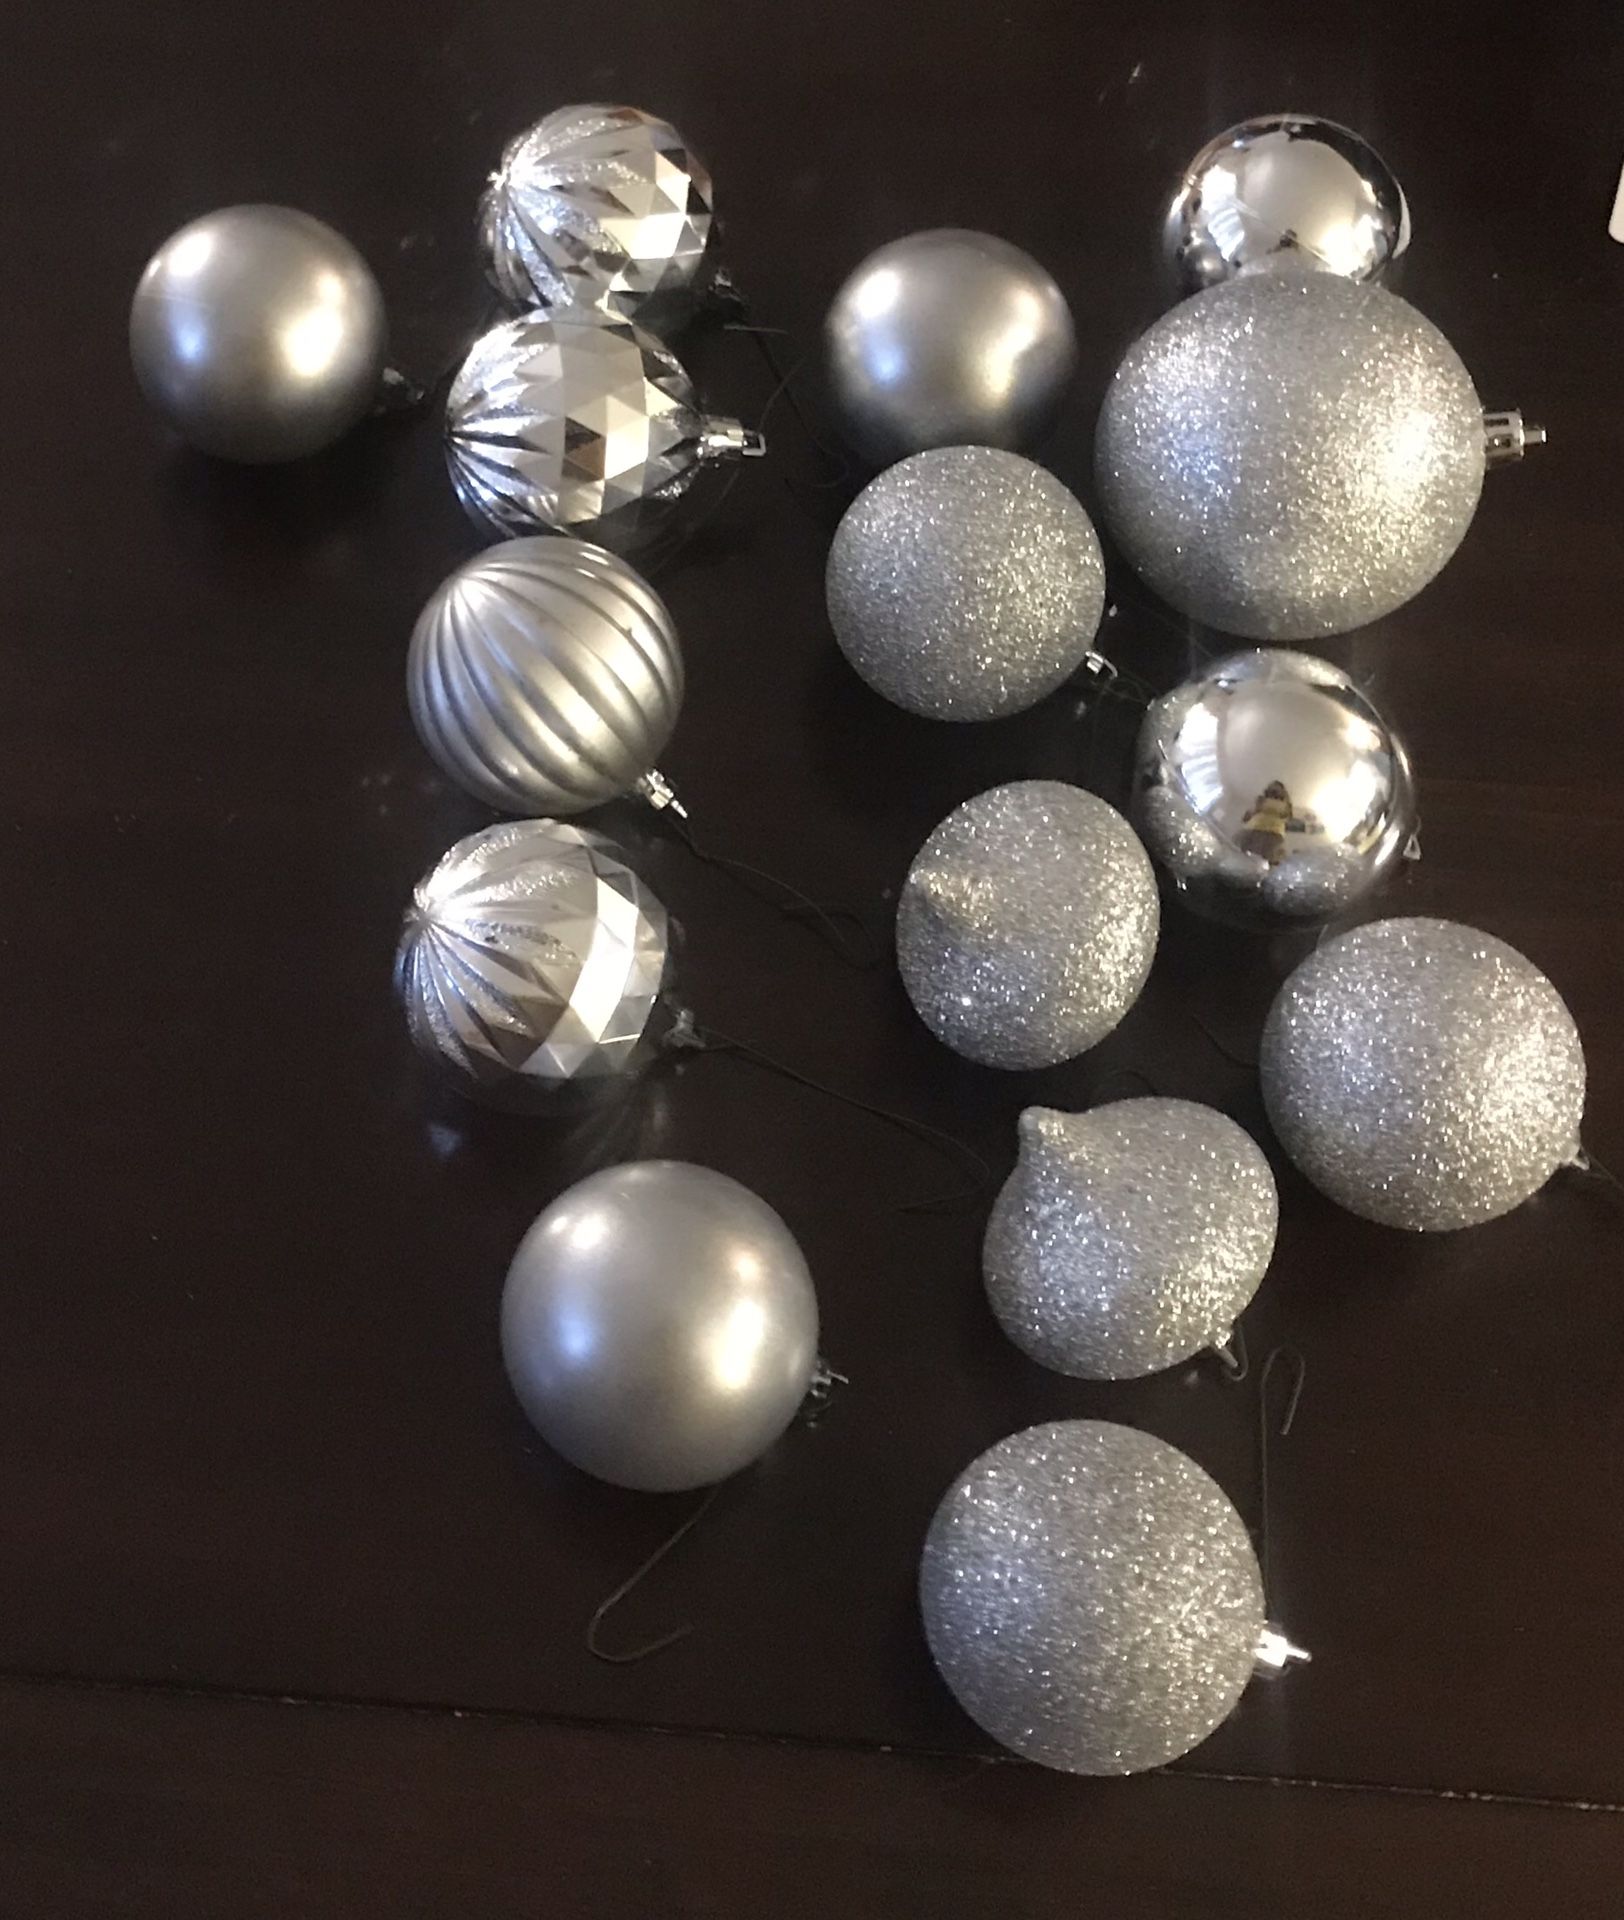 14 silver Christmas ornaments